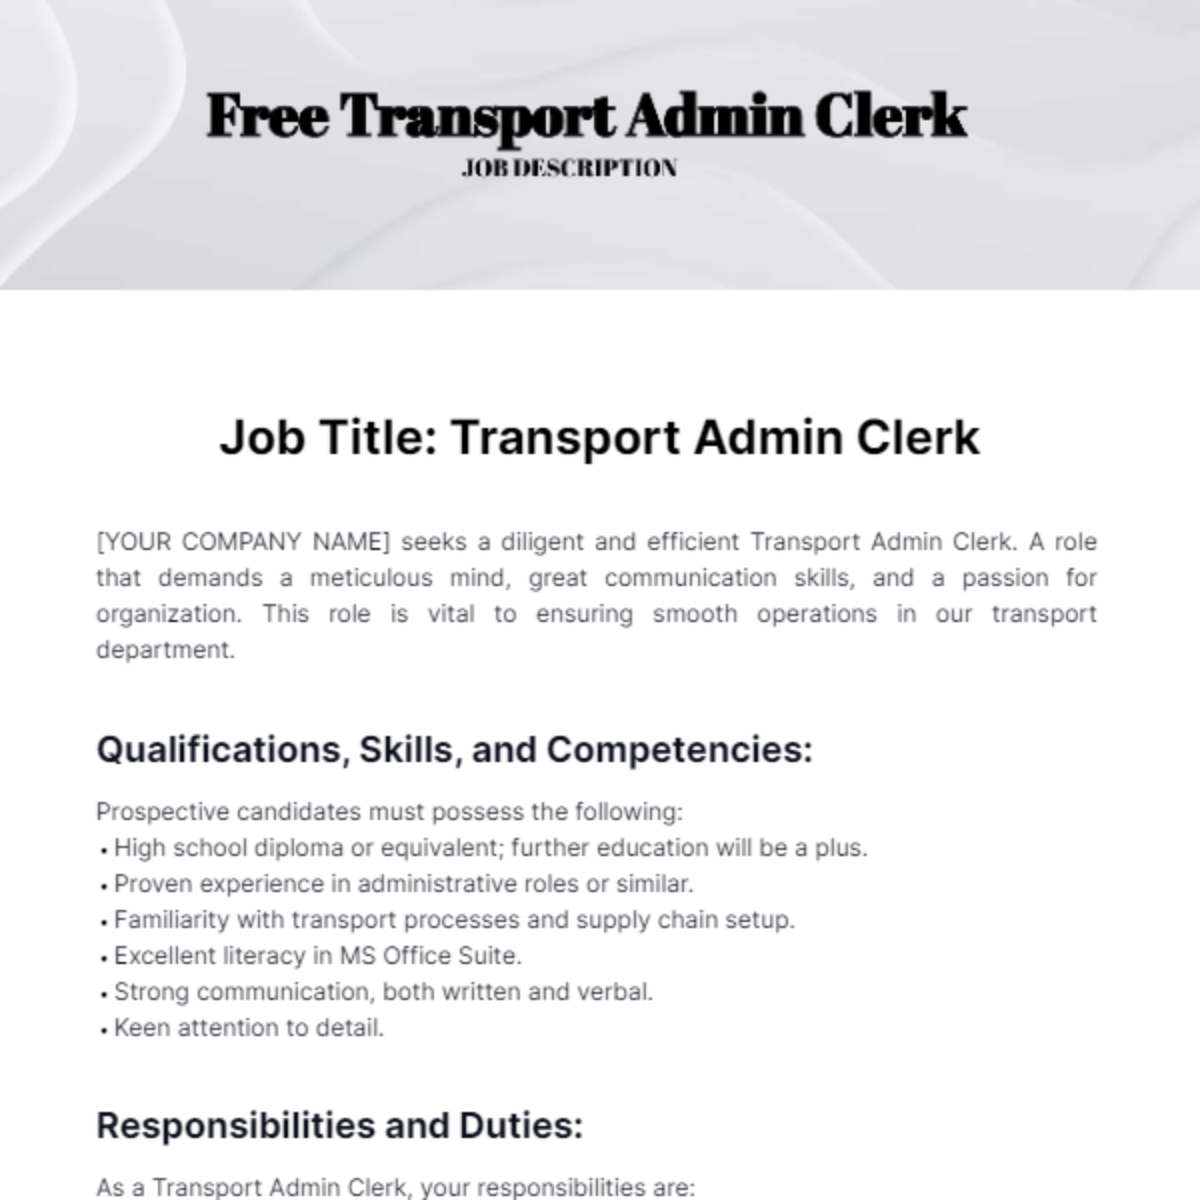 Free Transport Admin Clerk Job Description Template